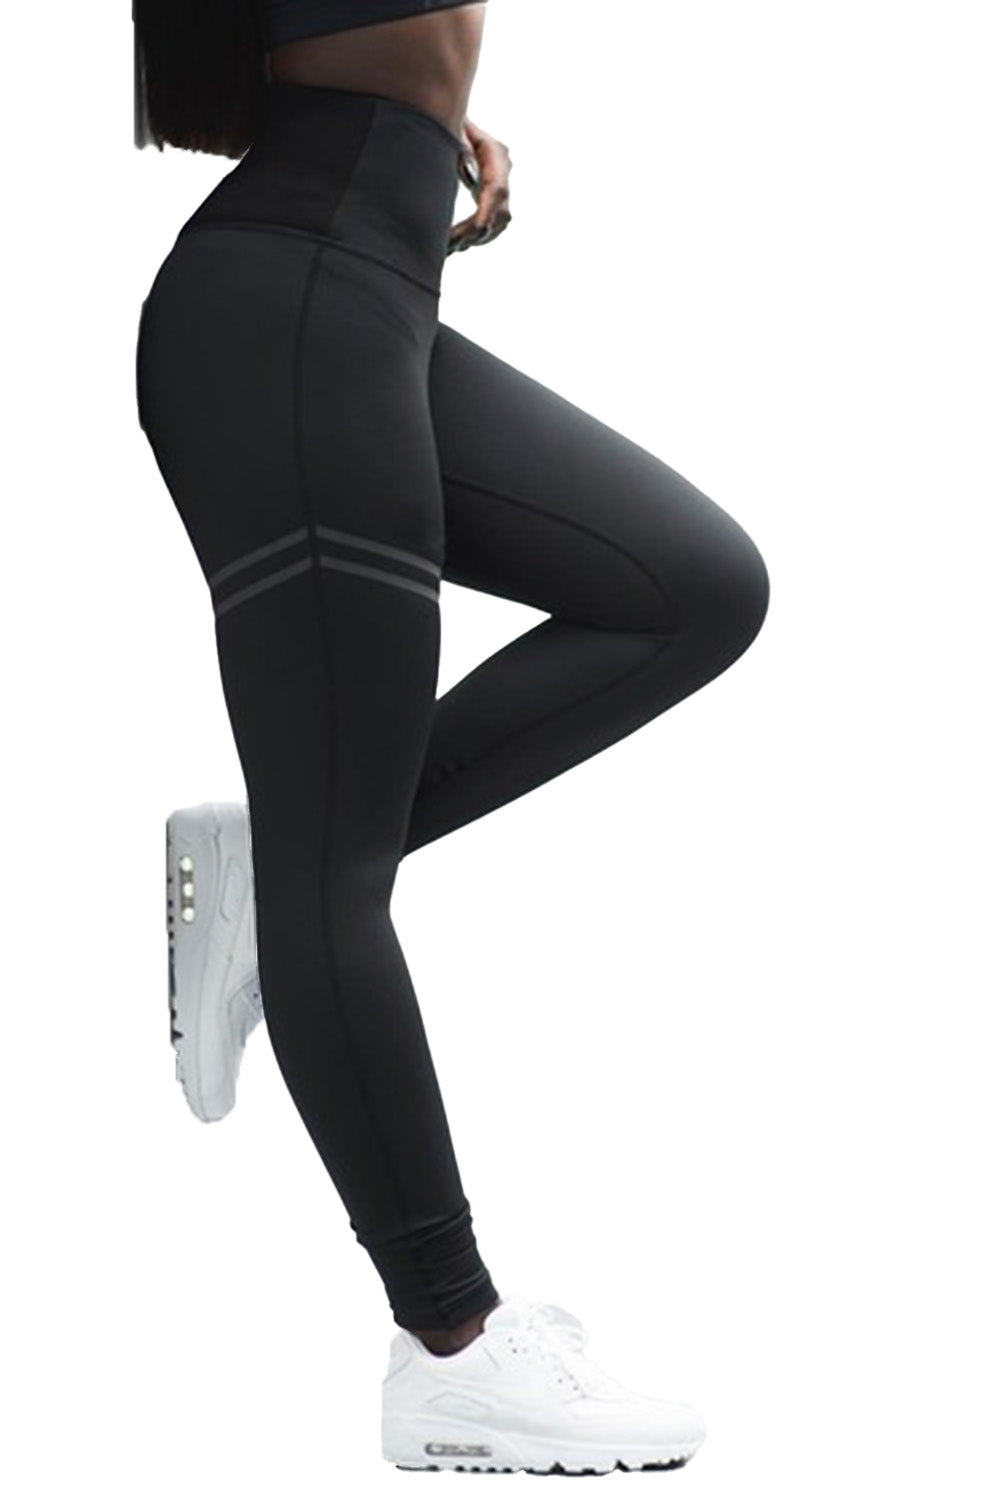 Black Running Gym High Waist Sport Yoga Fitness Leggings - EBEPEX